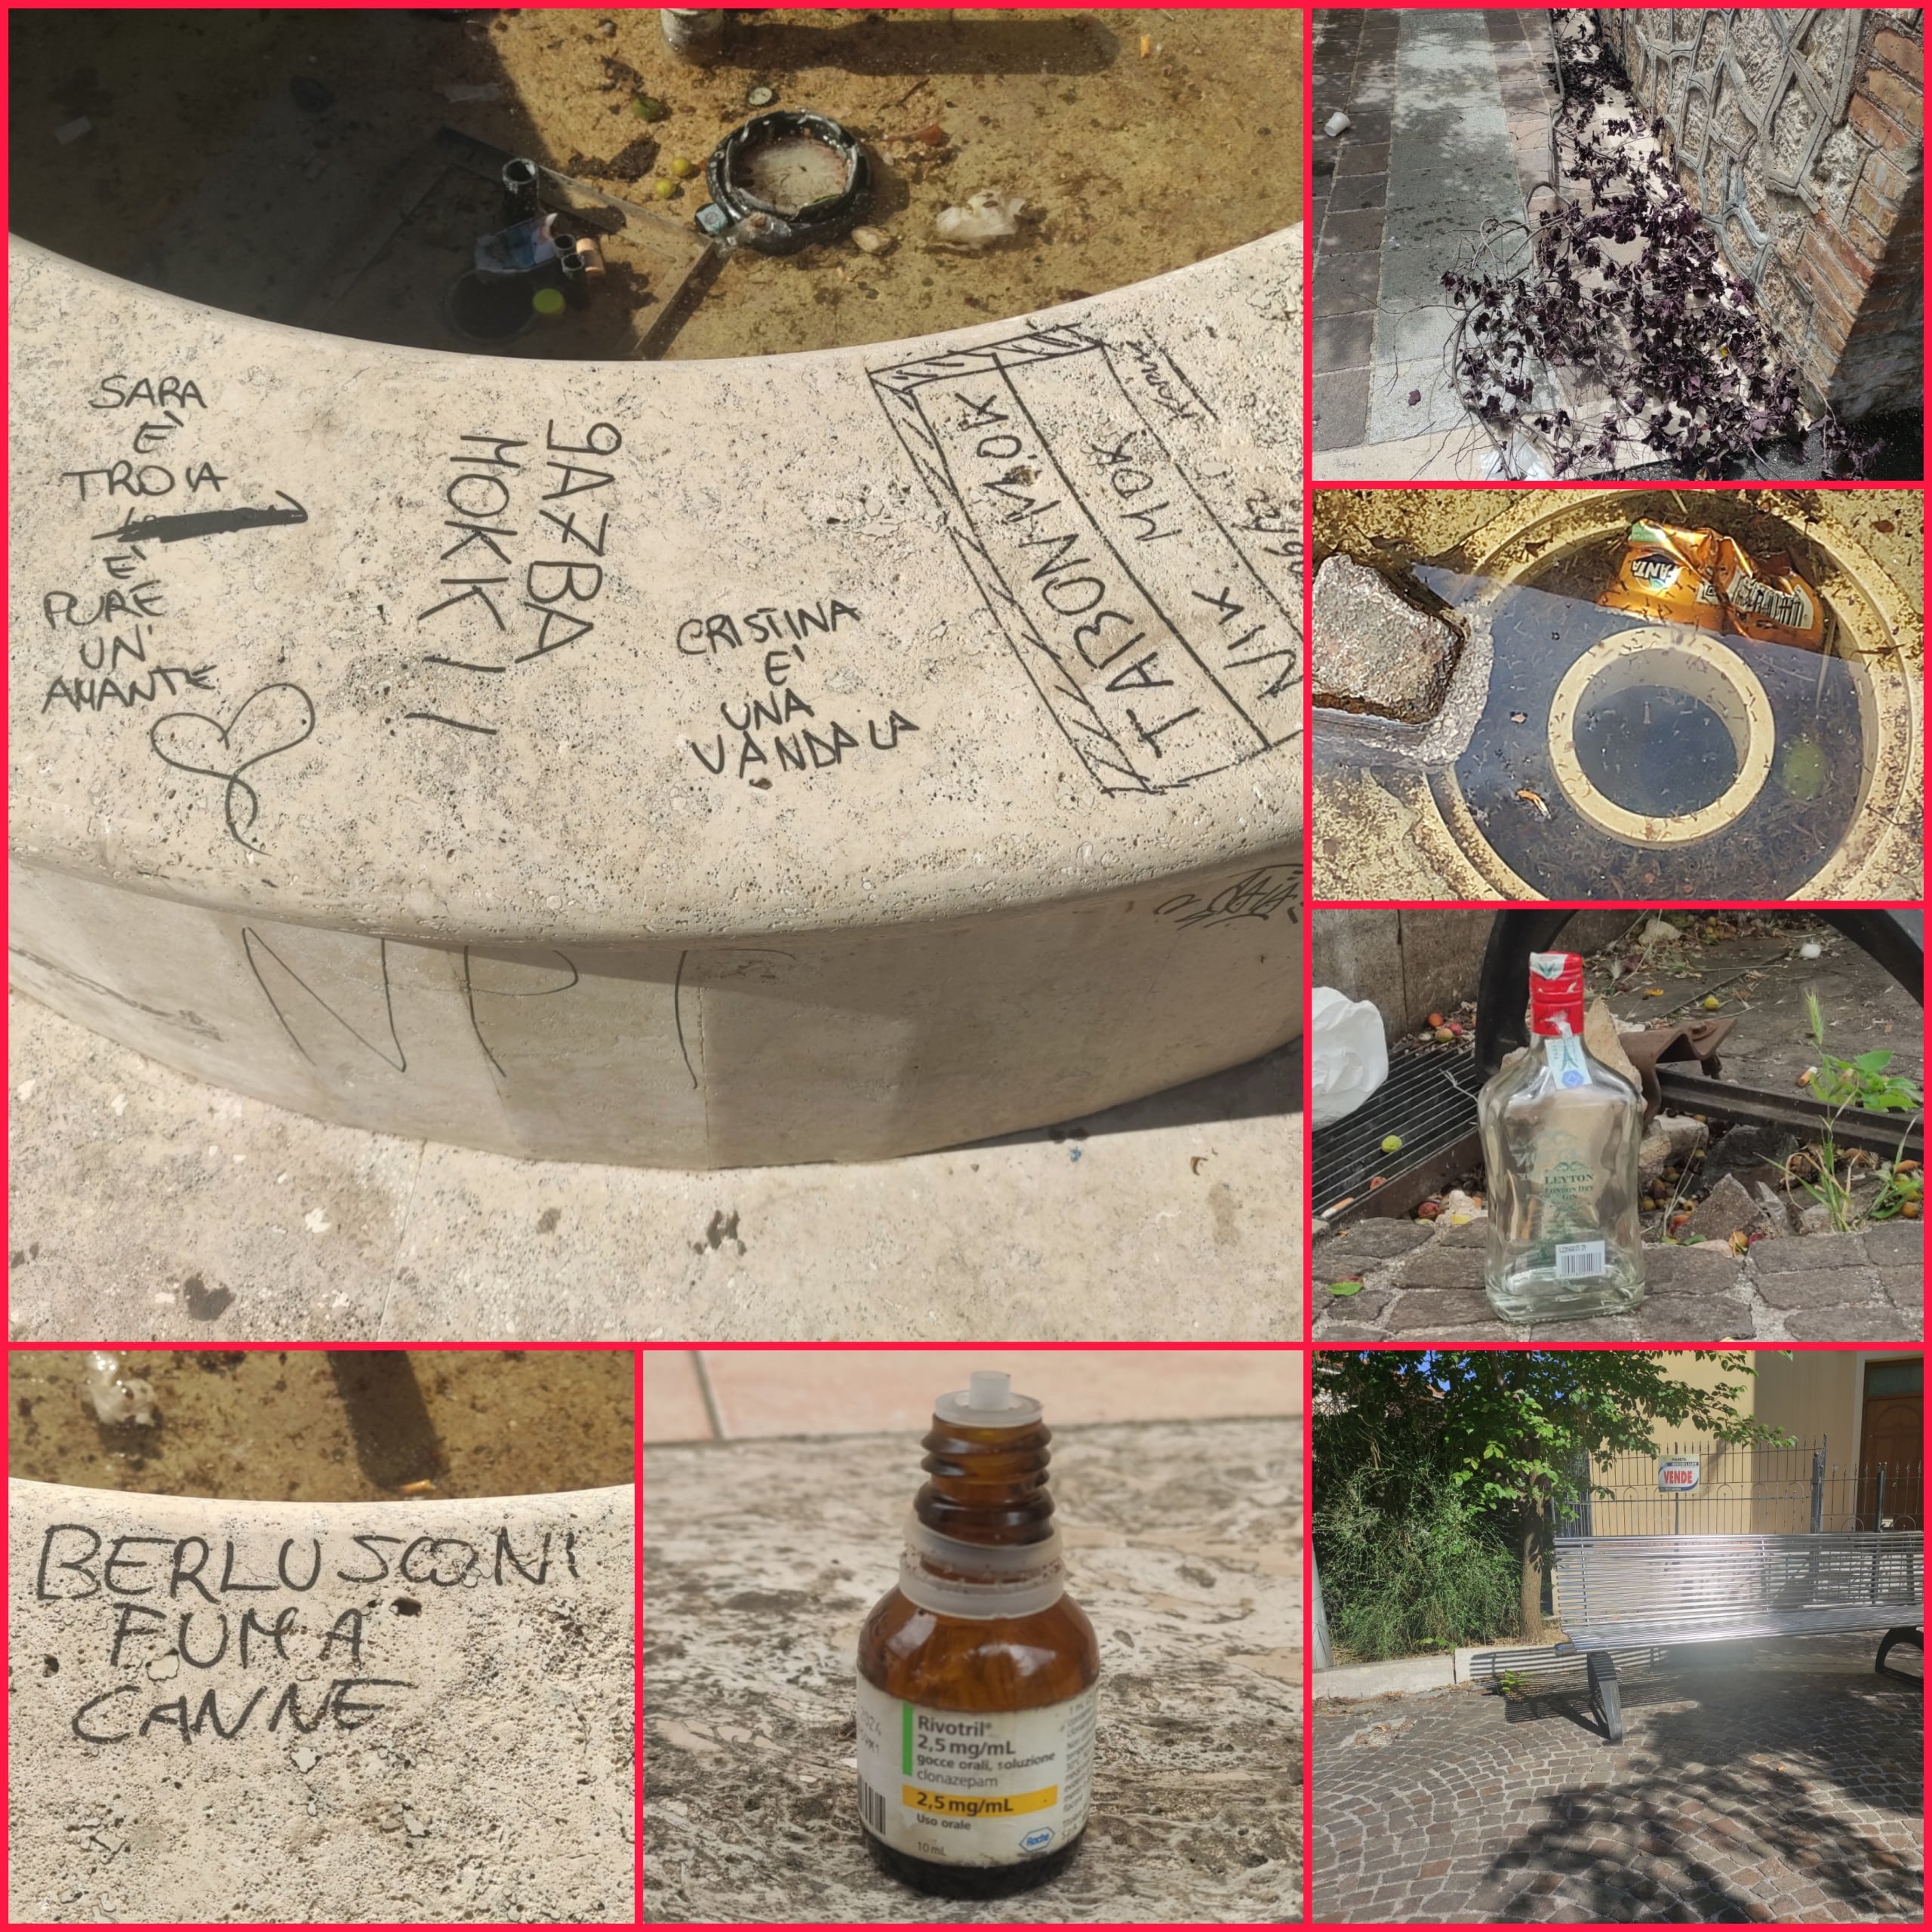 Largo Enea Merolli in preda a vandalismo: panchine rotte, fontane imbrattate, alcol, droghe pesanti da strada